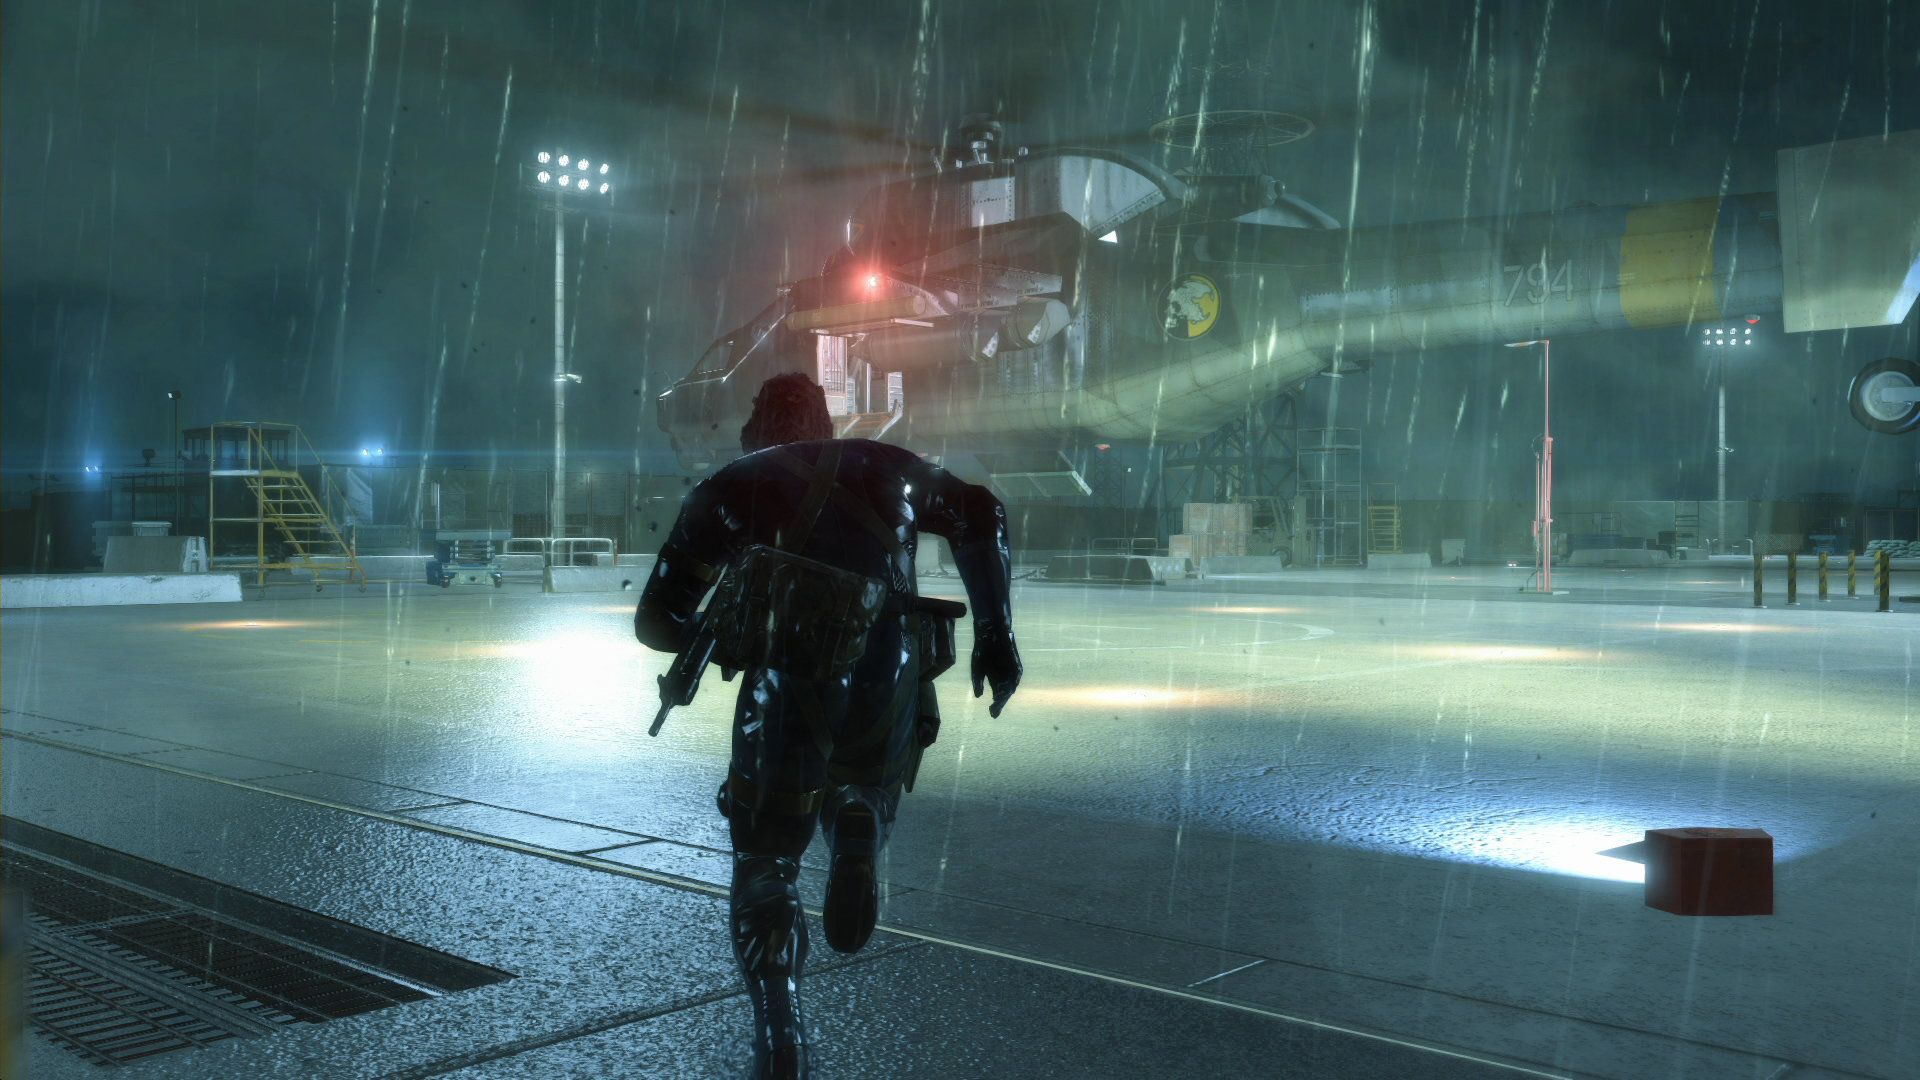 High resolution Metal Gear Solid 5 (V): The Phantom Pain (MGSV 5) hd 1080p wallpaper ID:460339 for PC